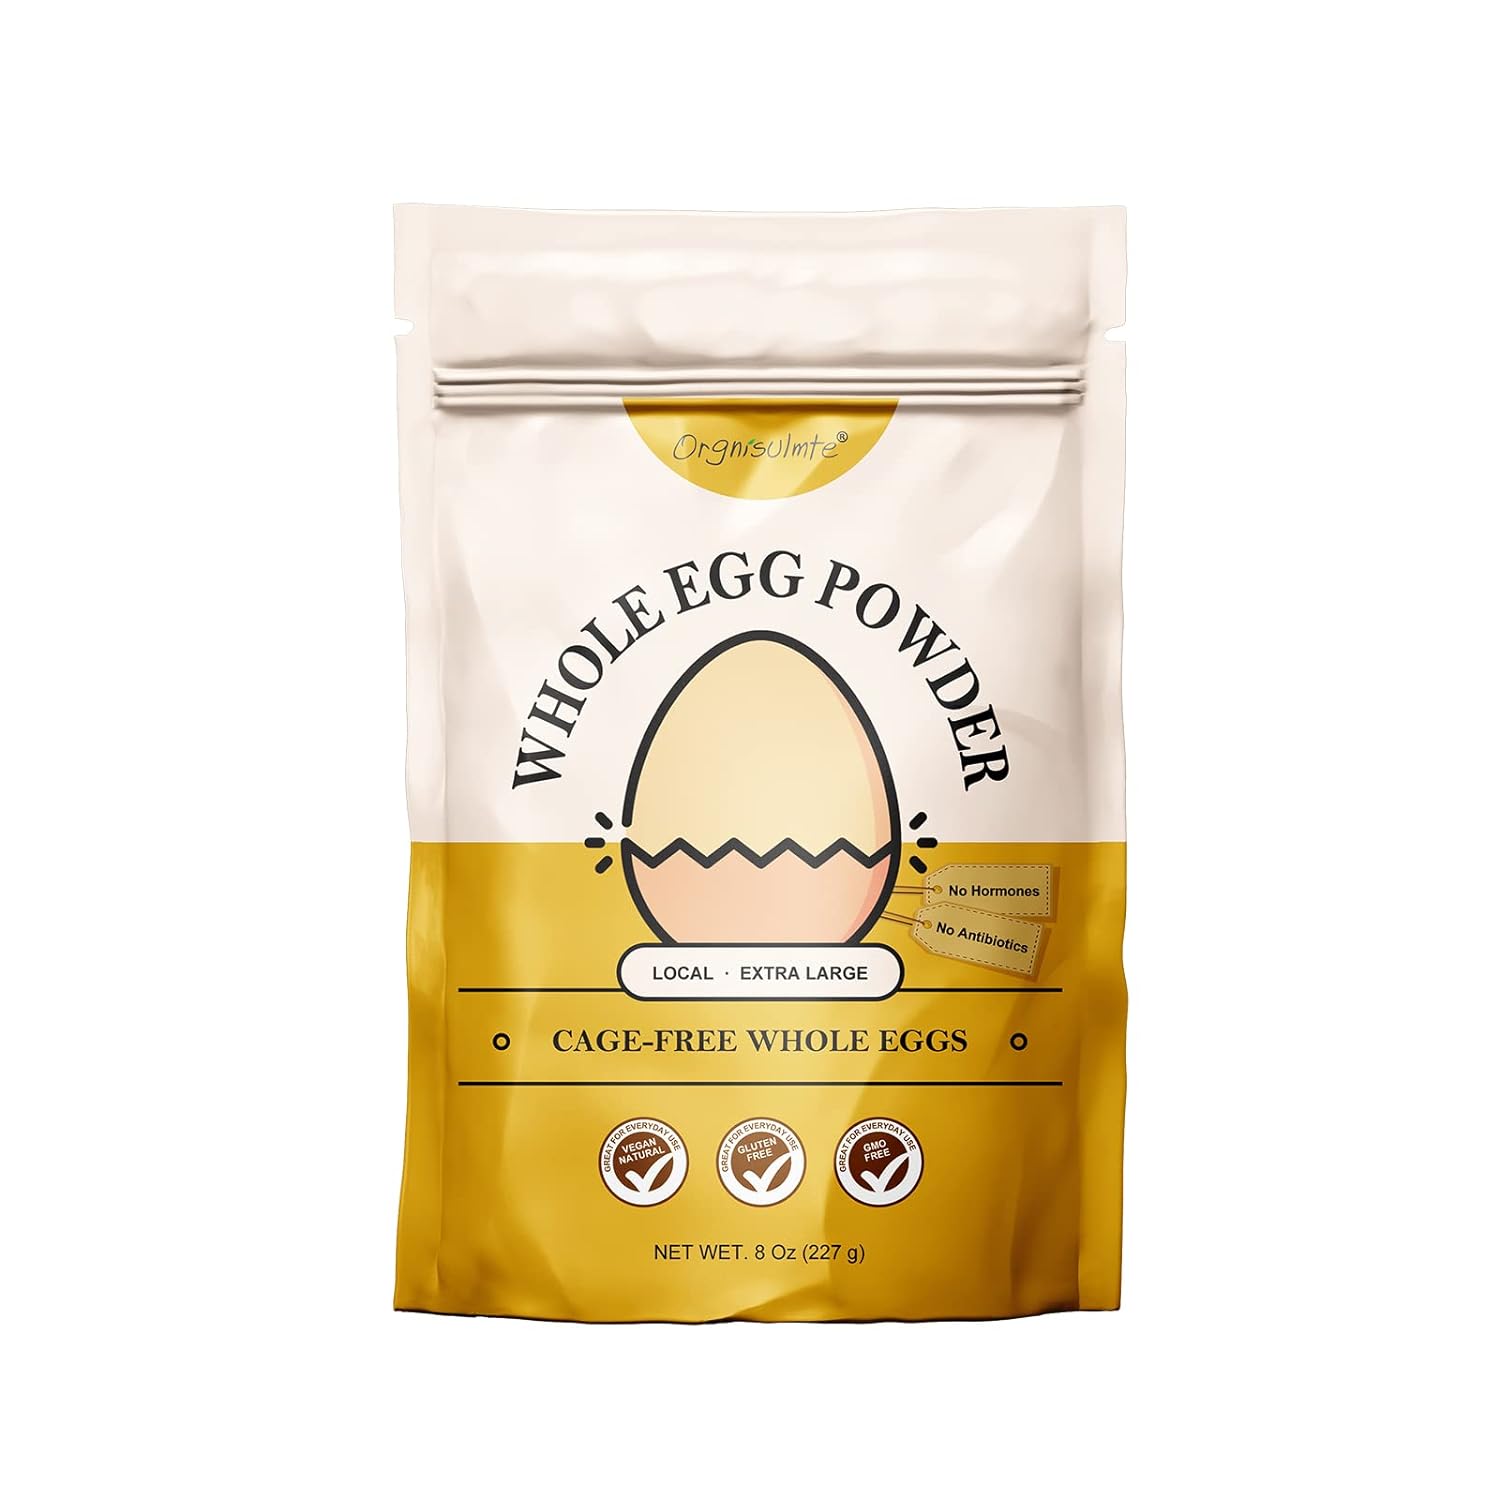 Orgnisulmte Whole Egg Powder